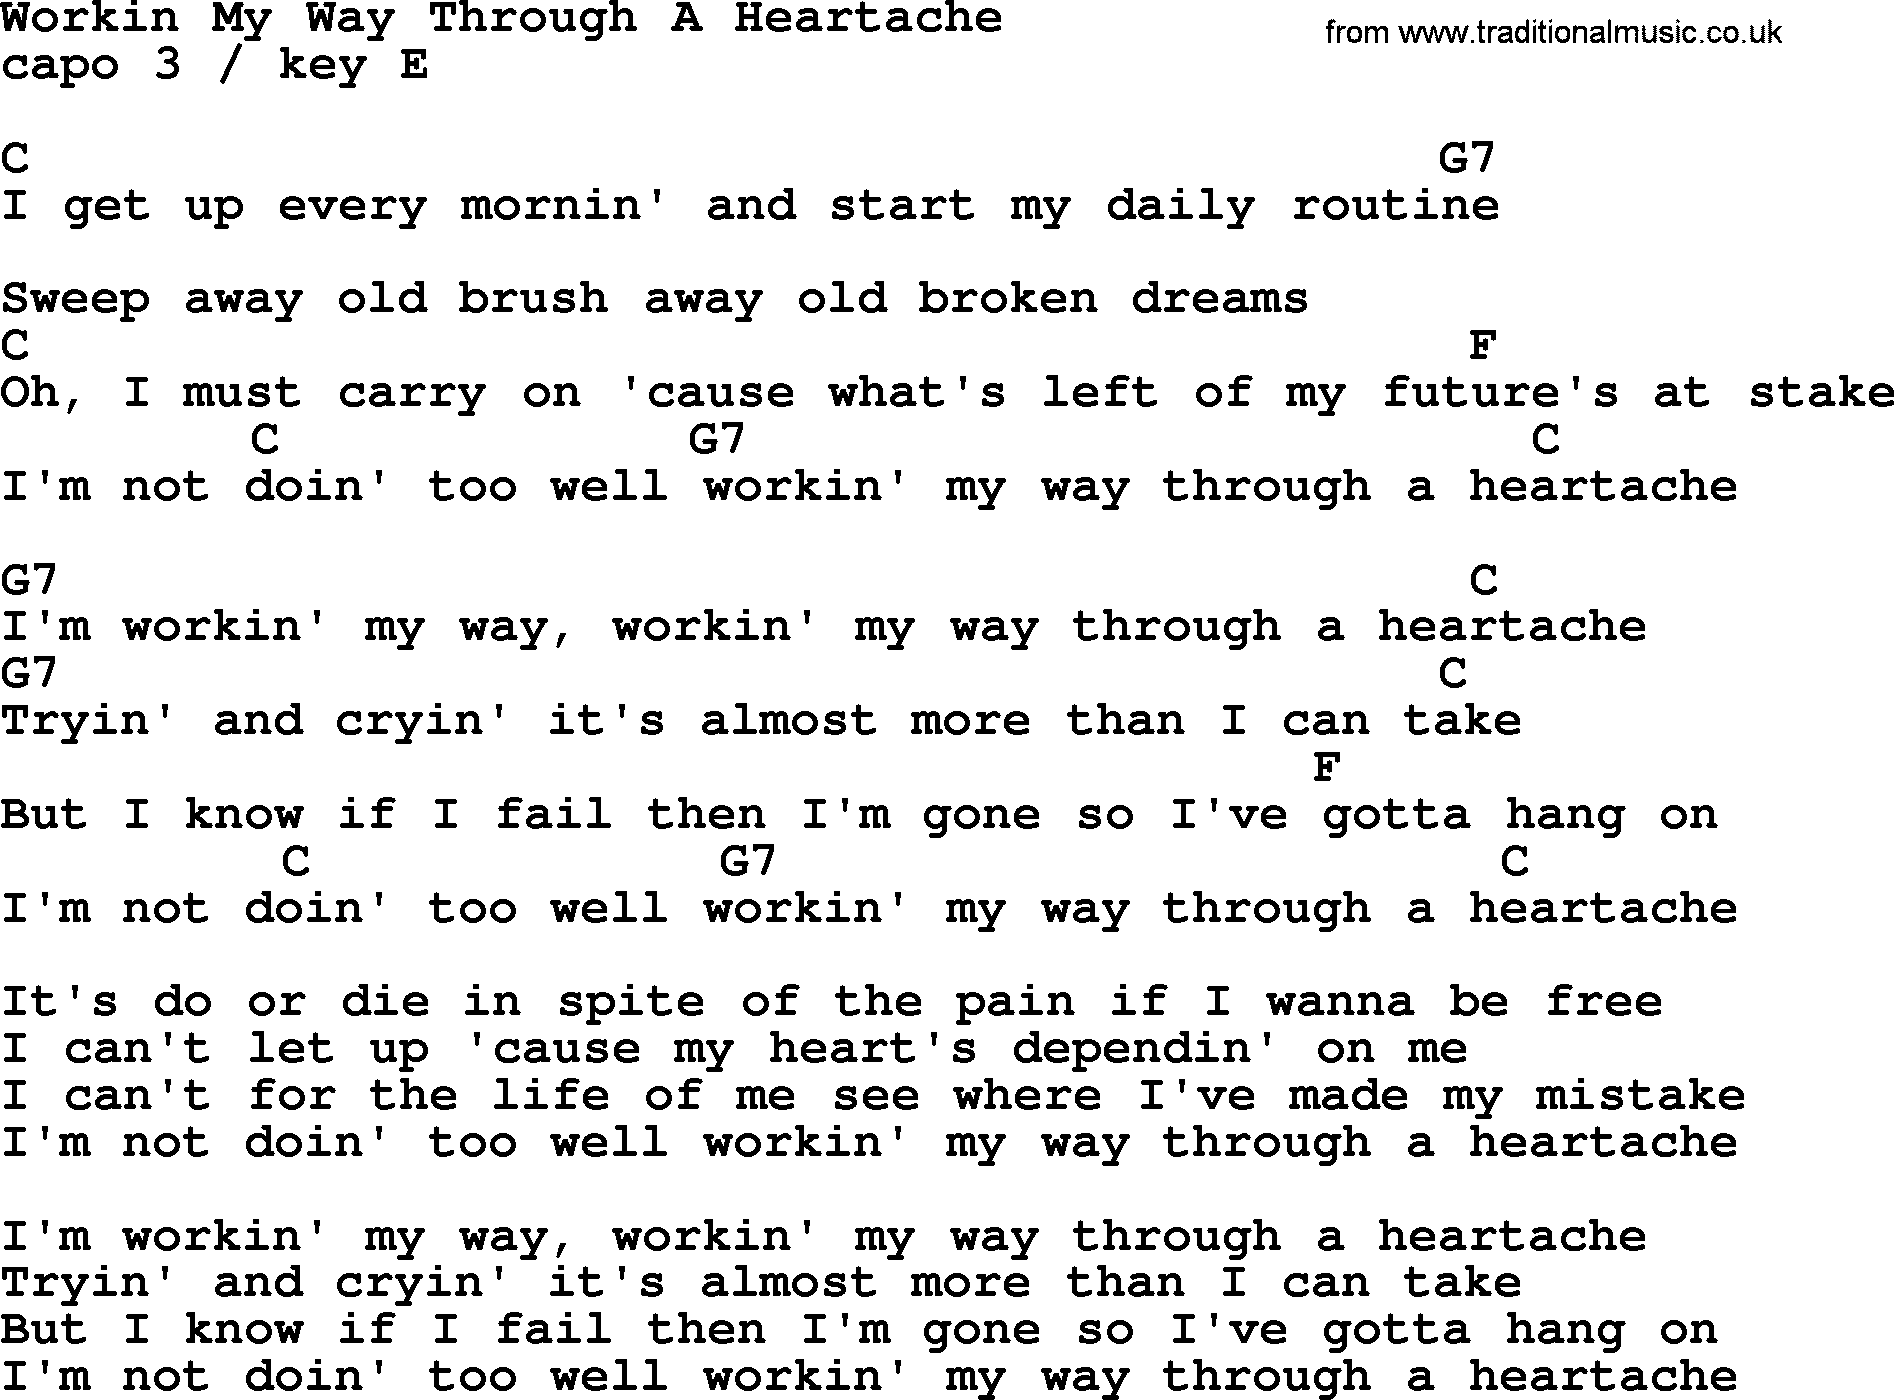 Marty Robbins song: Workin My Way Through A Heartache, lyrics and chords